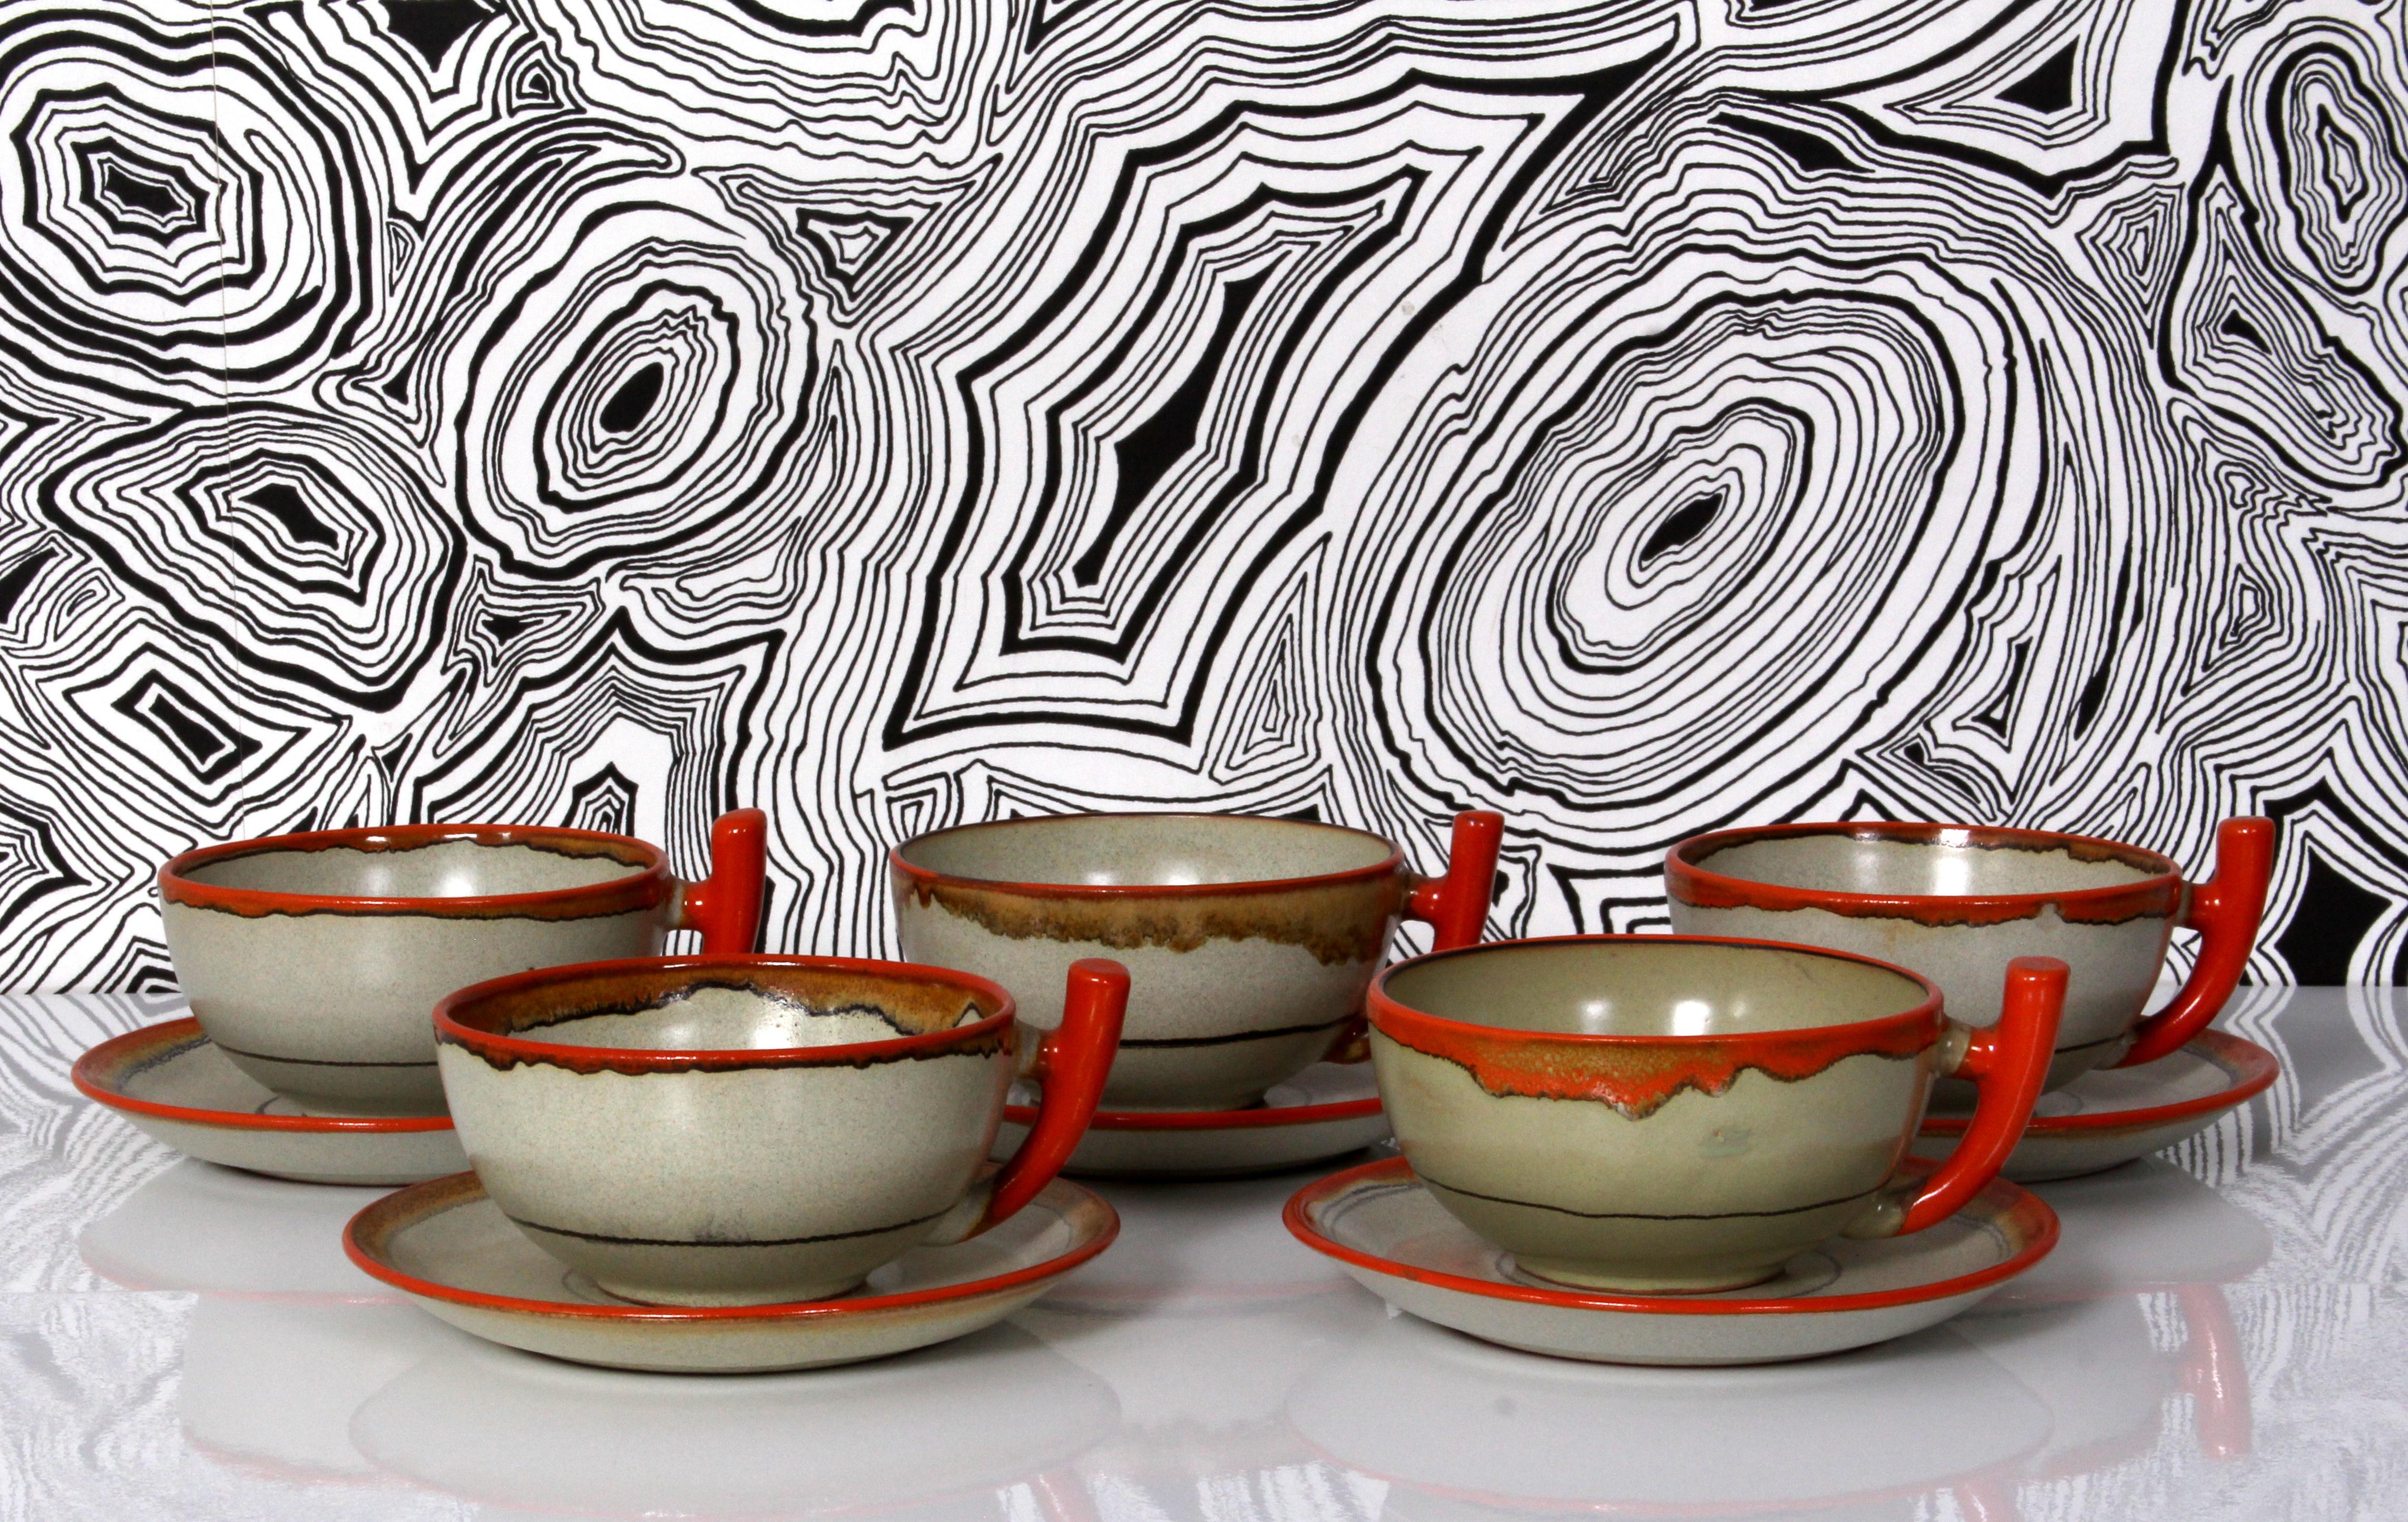 Art Deco Tea Service by Carstens Uffrecht ar 1930 uranium glaze + cups + plates  For Sale 8